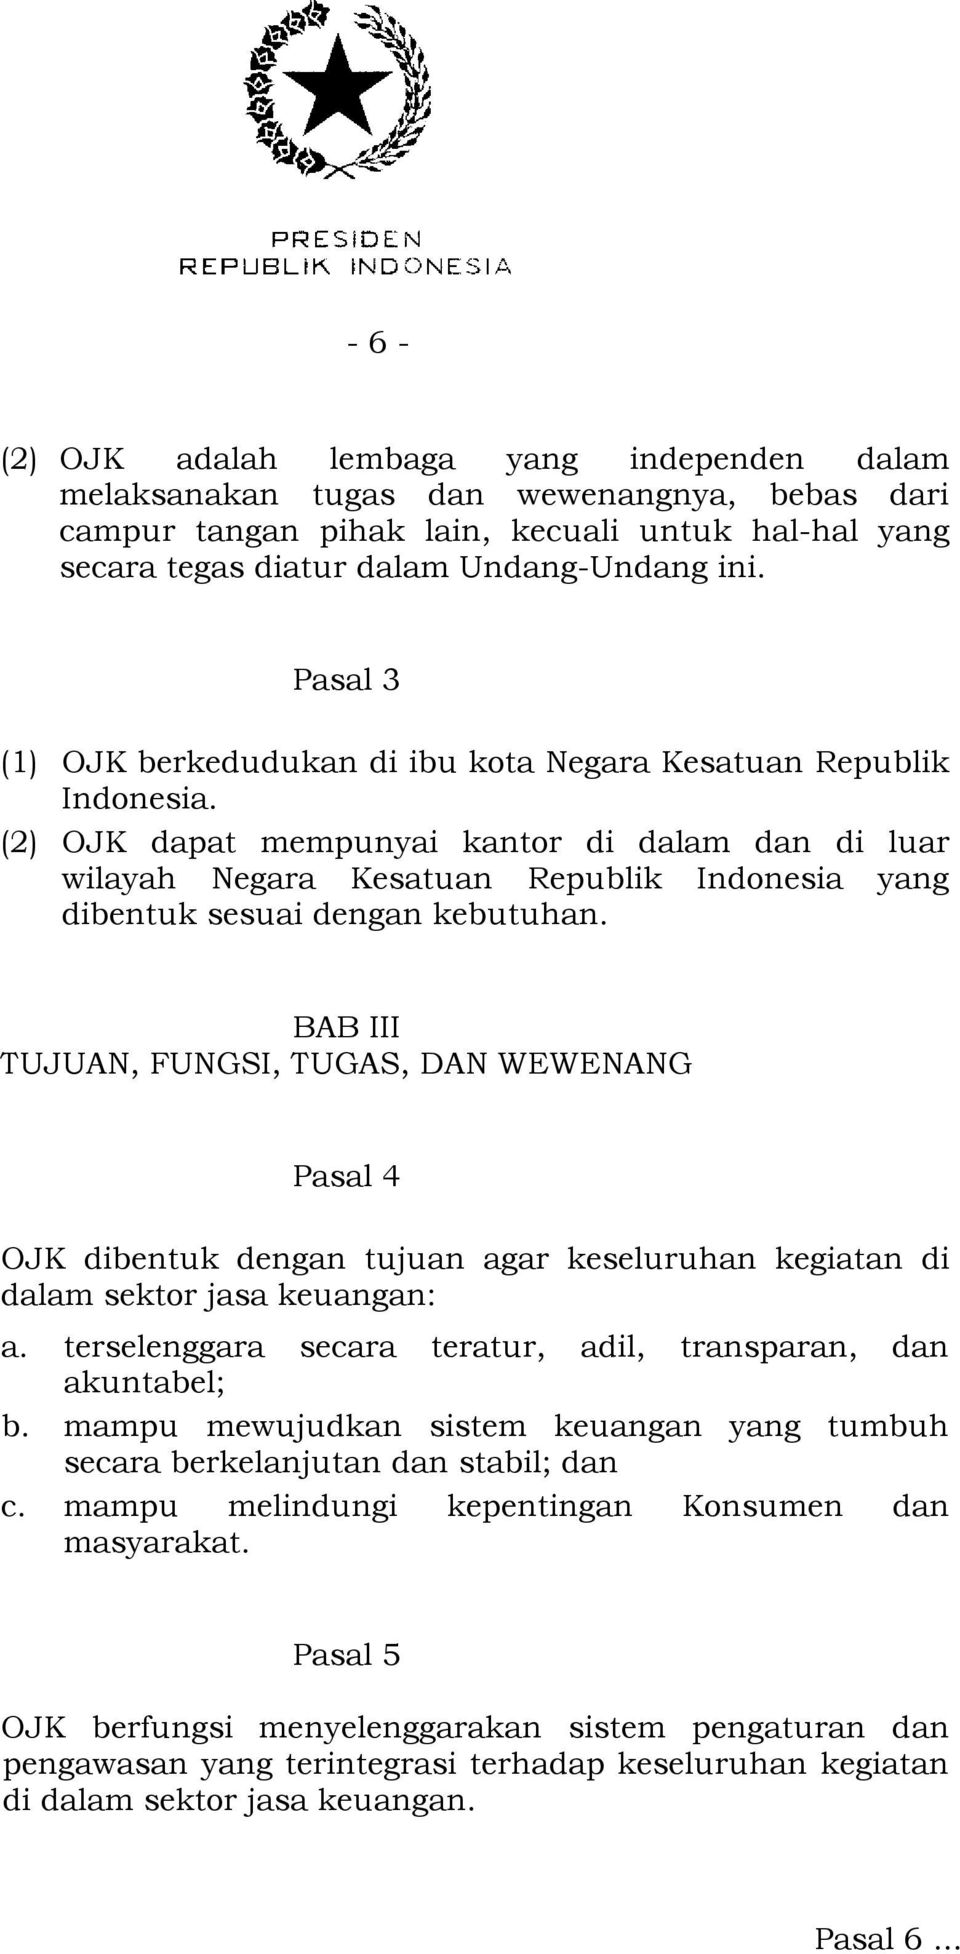 (2) OJK dapat mempunyai kantor di dalam dan di luar wilayah Negara Kesatuan Republik Indonesia yang dibentuk sesuai dengan kebutuhan.